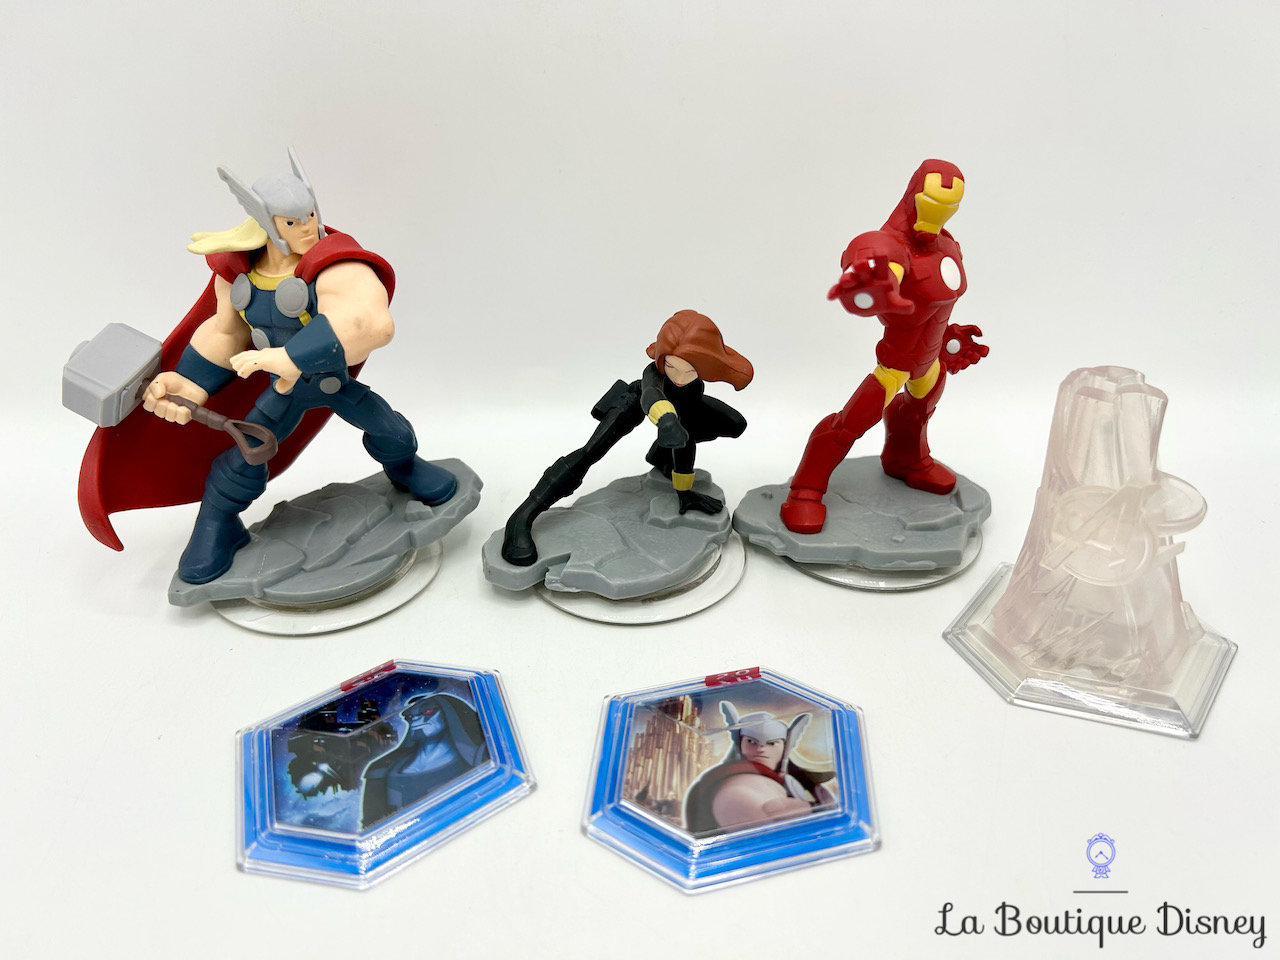 Figurine Disney Infinity 2.0 Pack Démarrage Marvel Thor Black Widow Iron Man Base Jeu vidéo